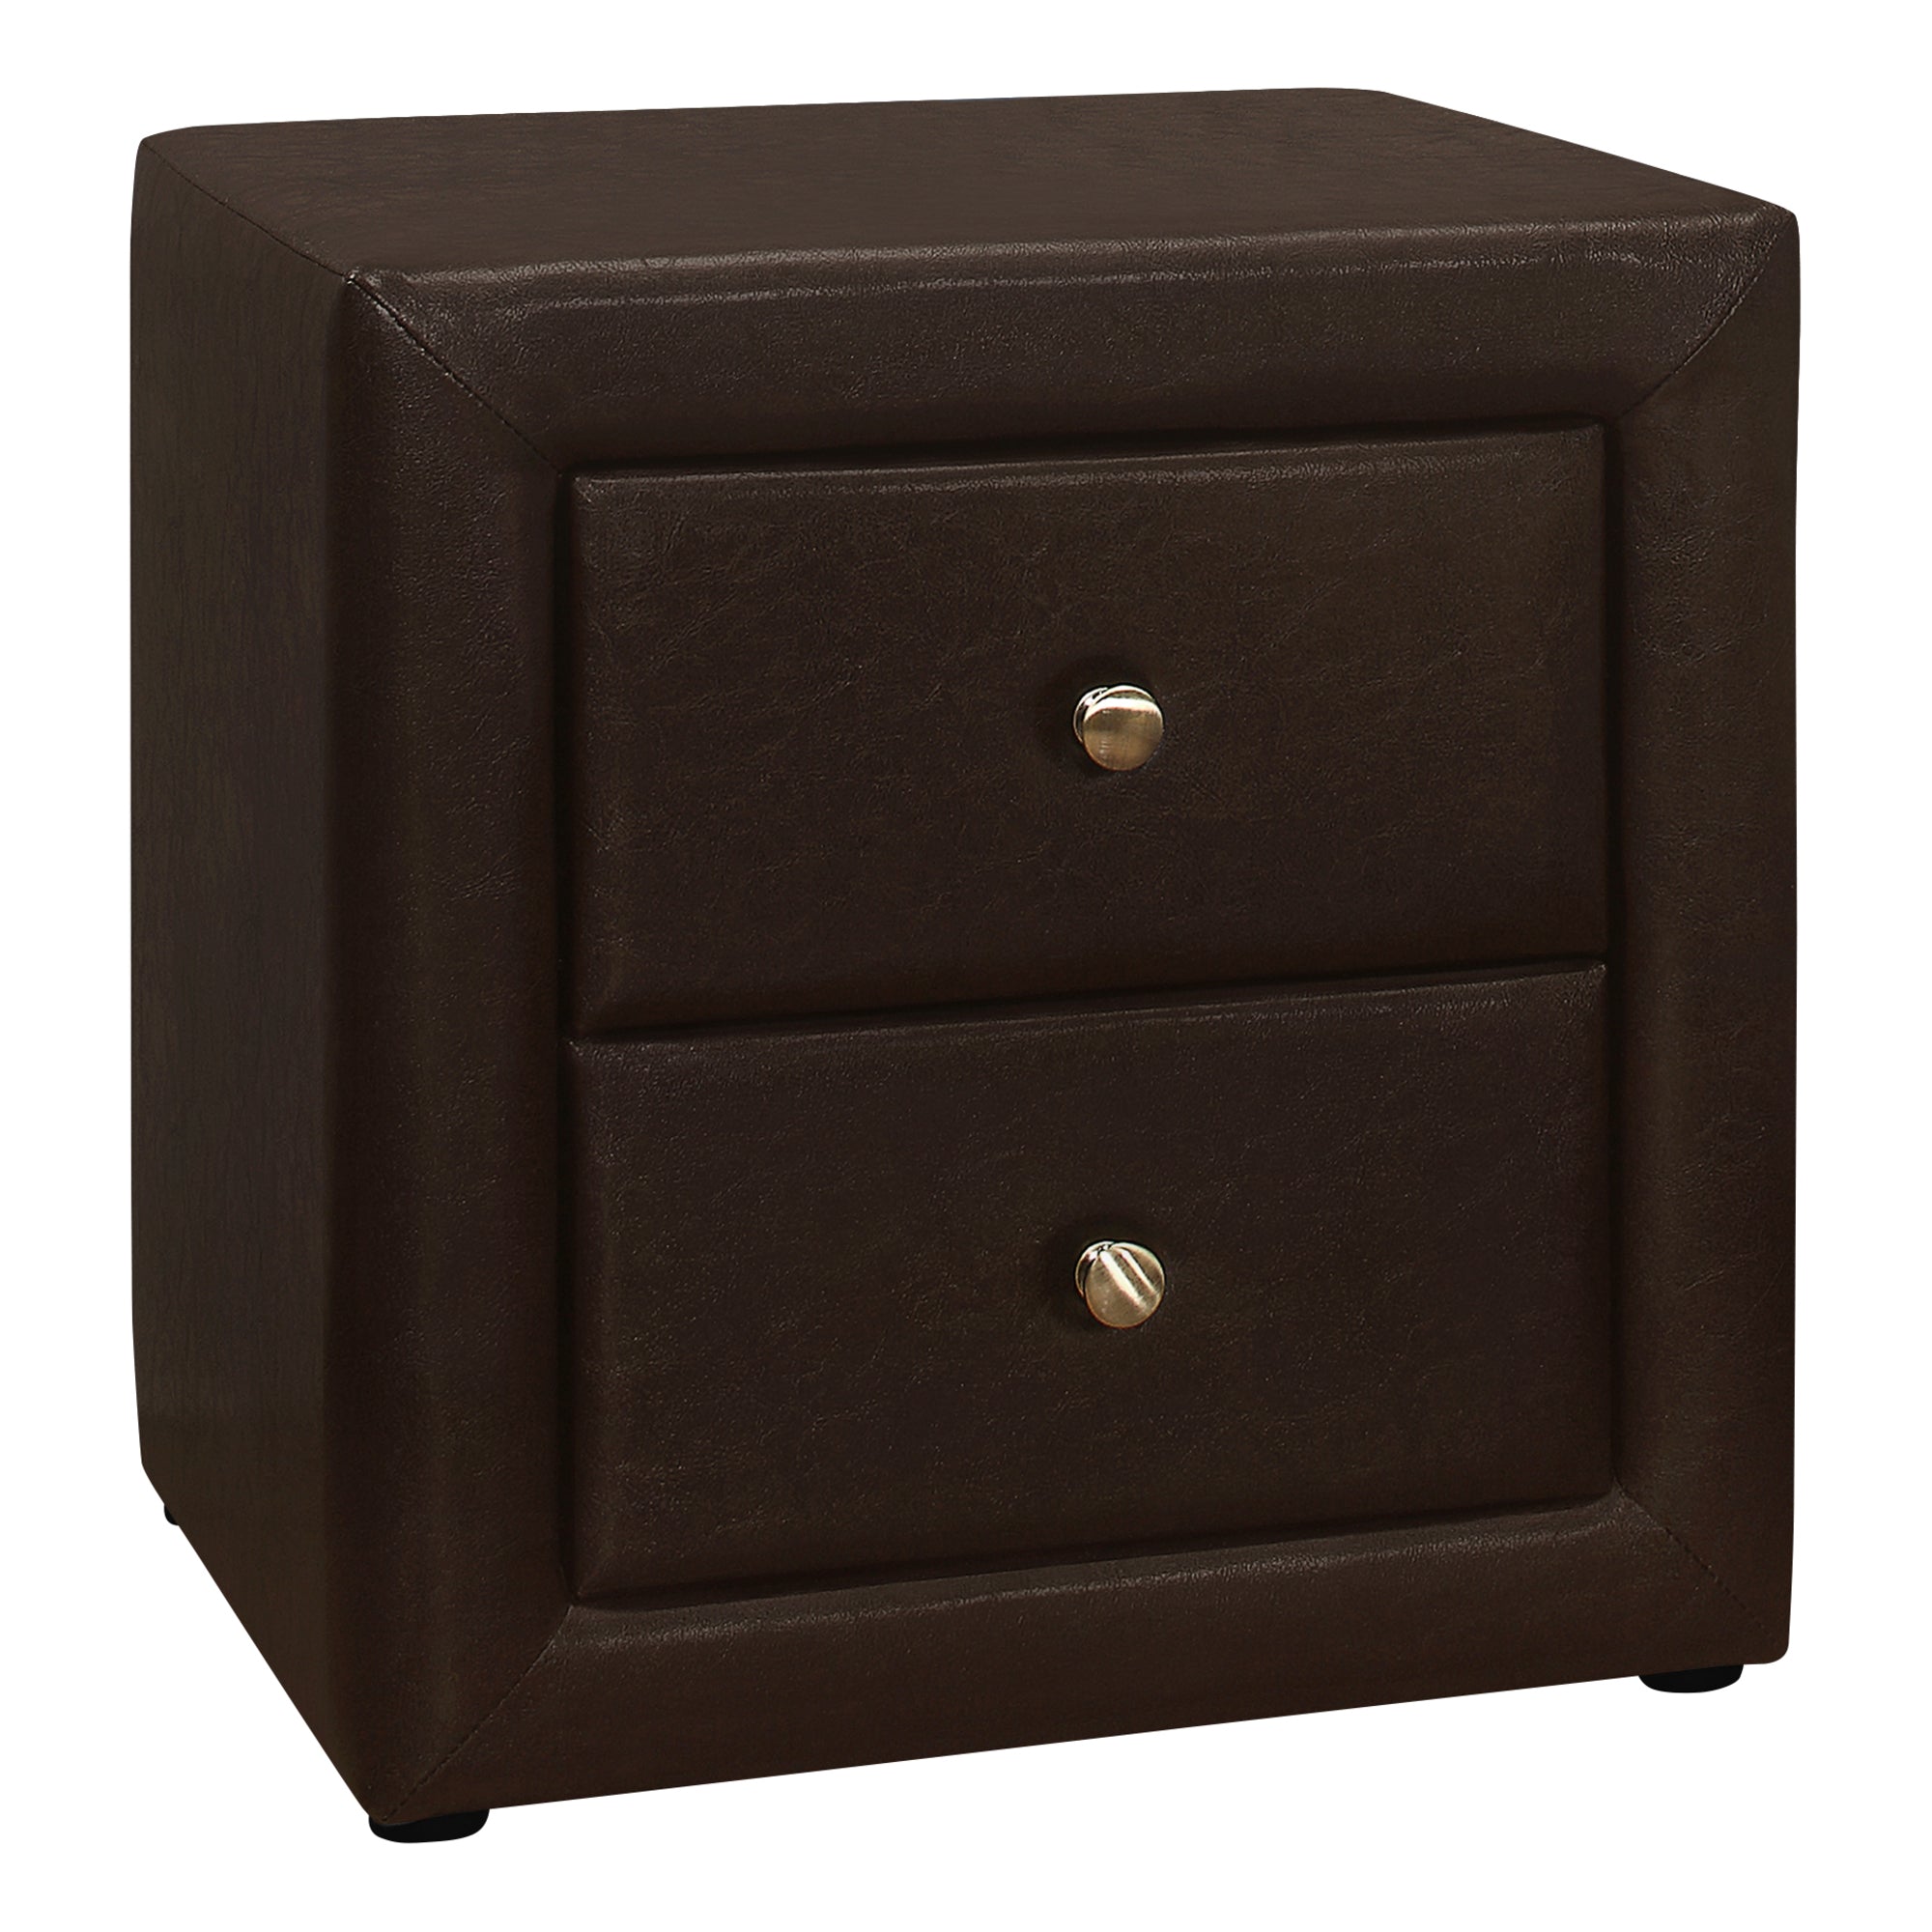 MN-785601    Nightstand - Upholstered / 2 Storage Drawers - 21"H - Dark Brown Leather-Look